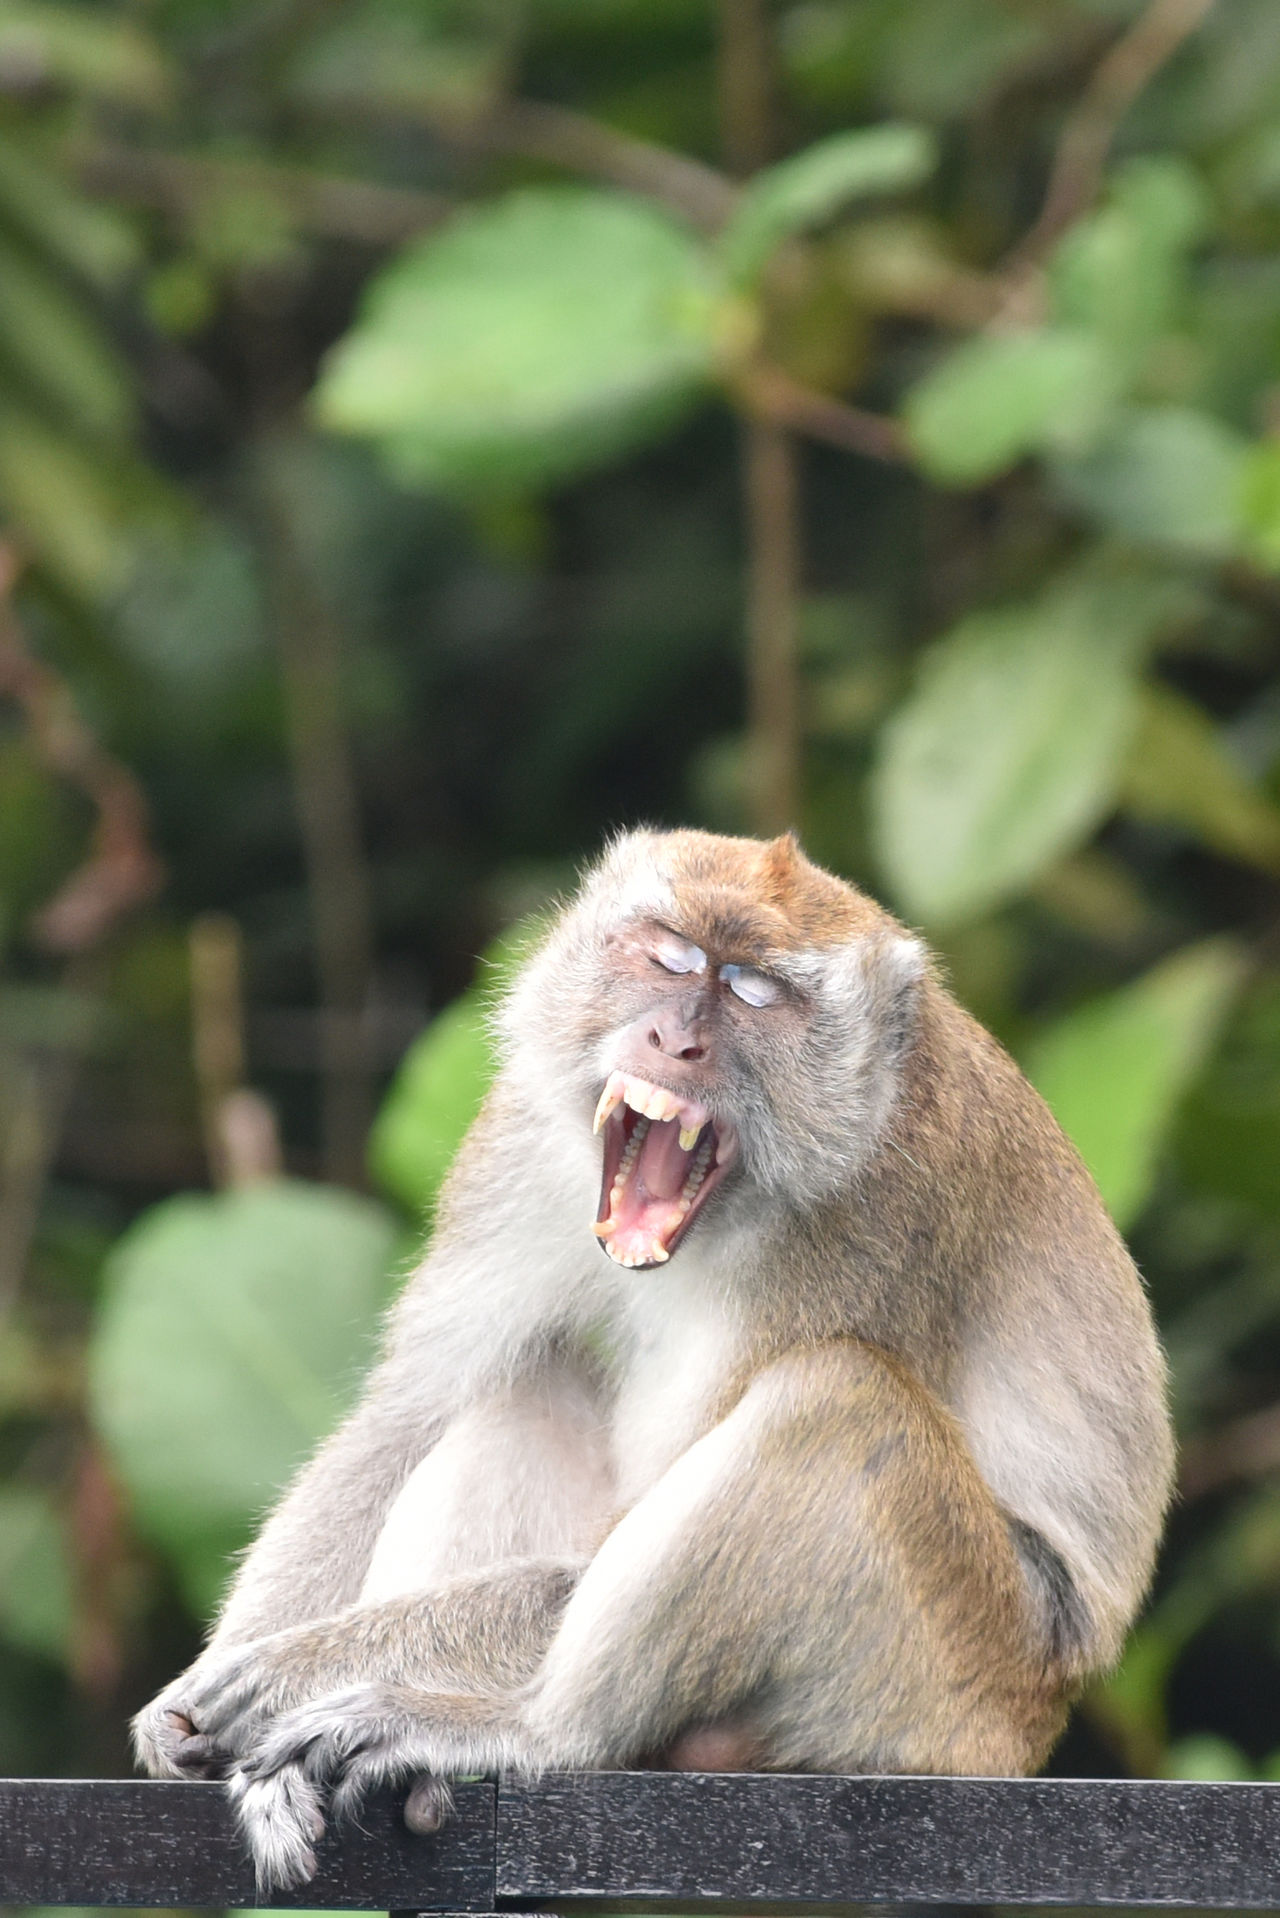 Monkey showing his teeth